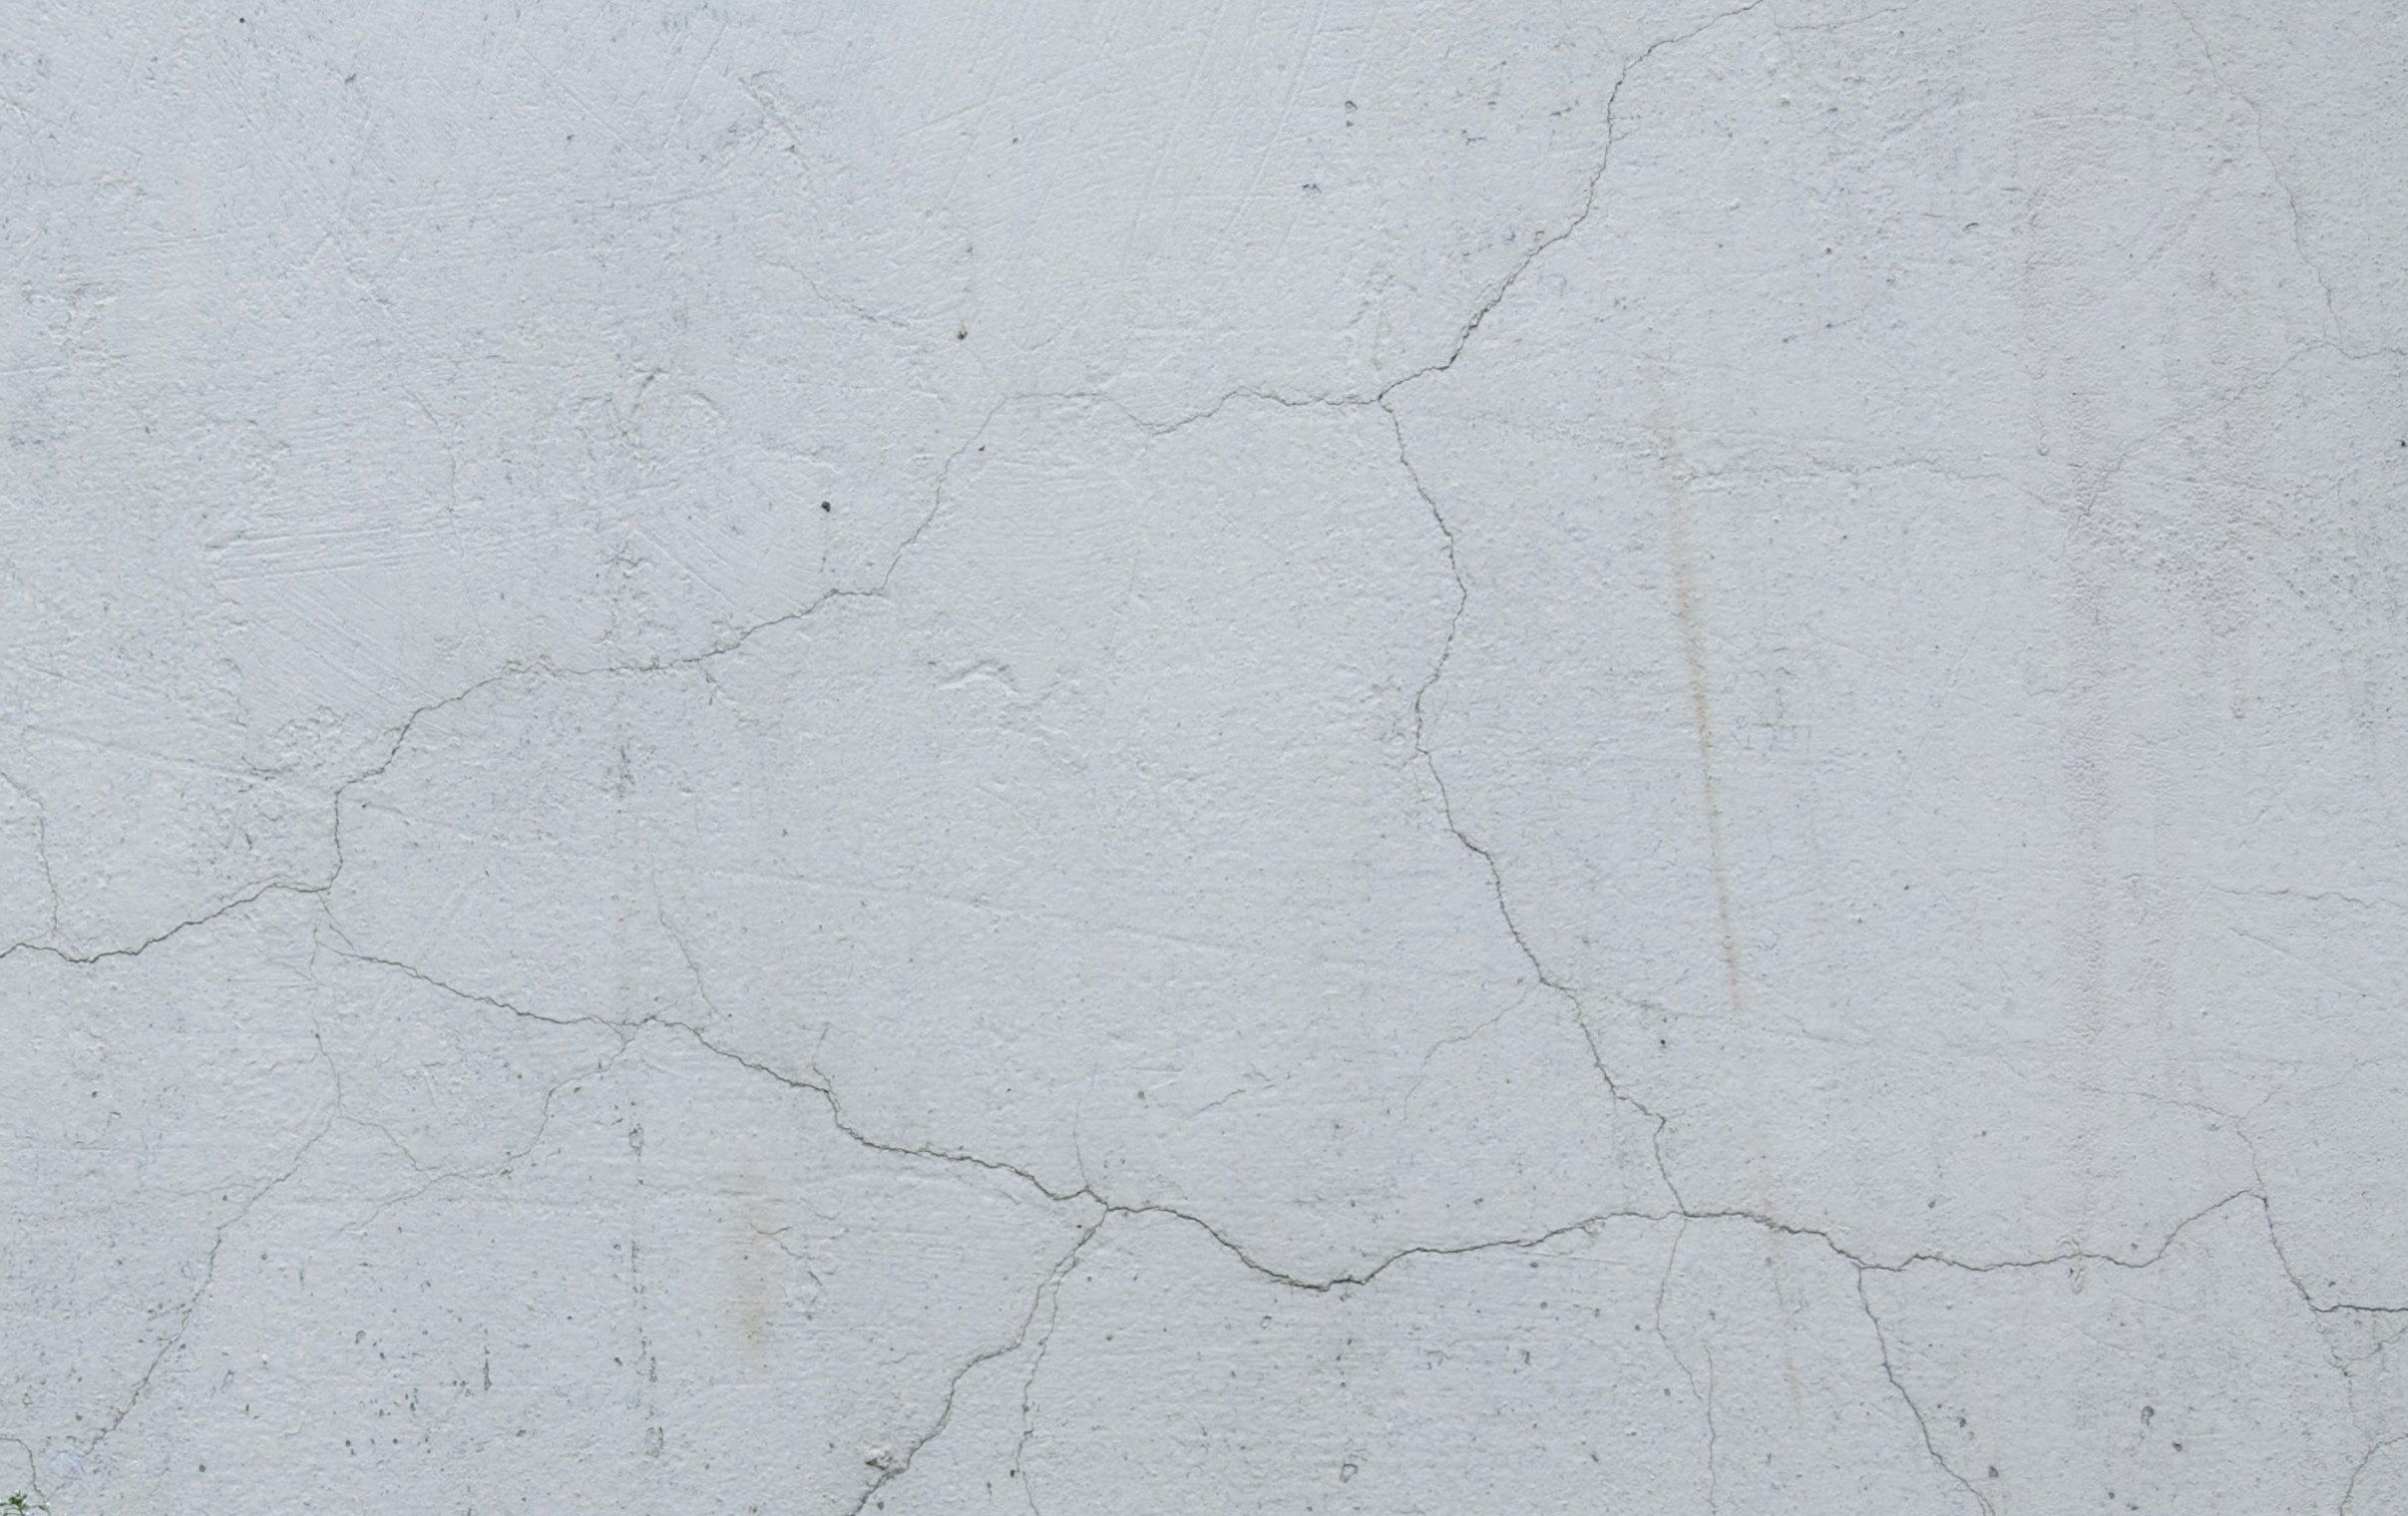 Plaster Ceiling Repair: How to Fix Hairline Cracks